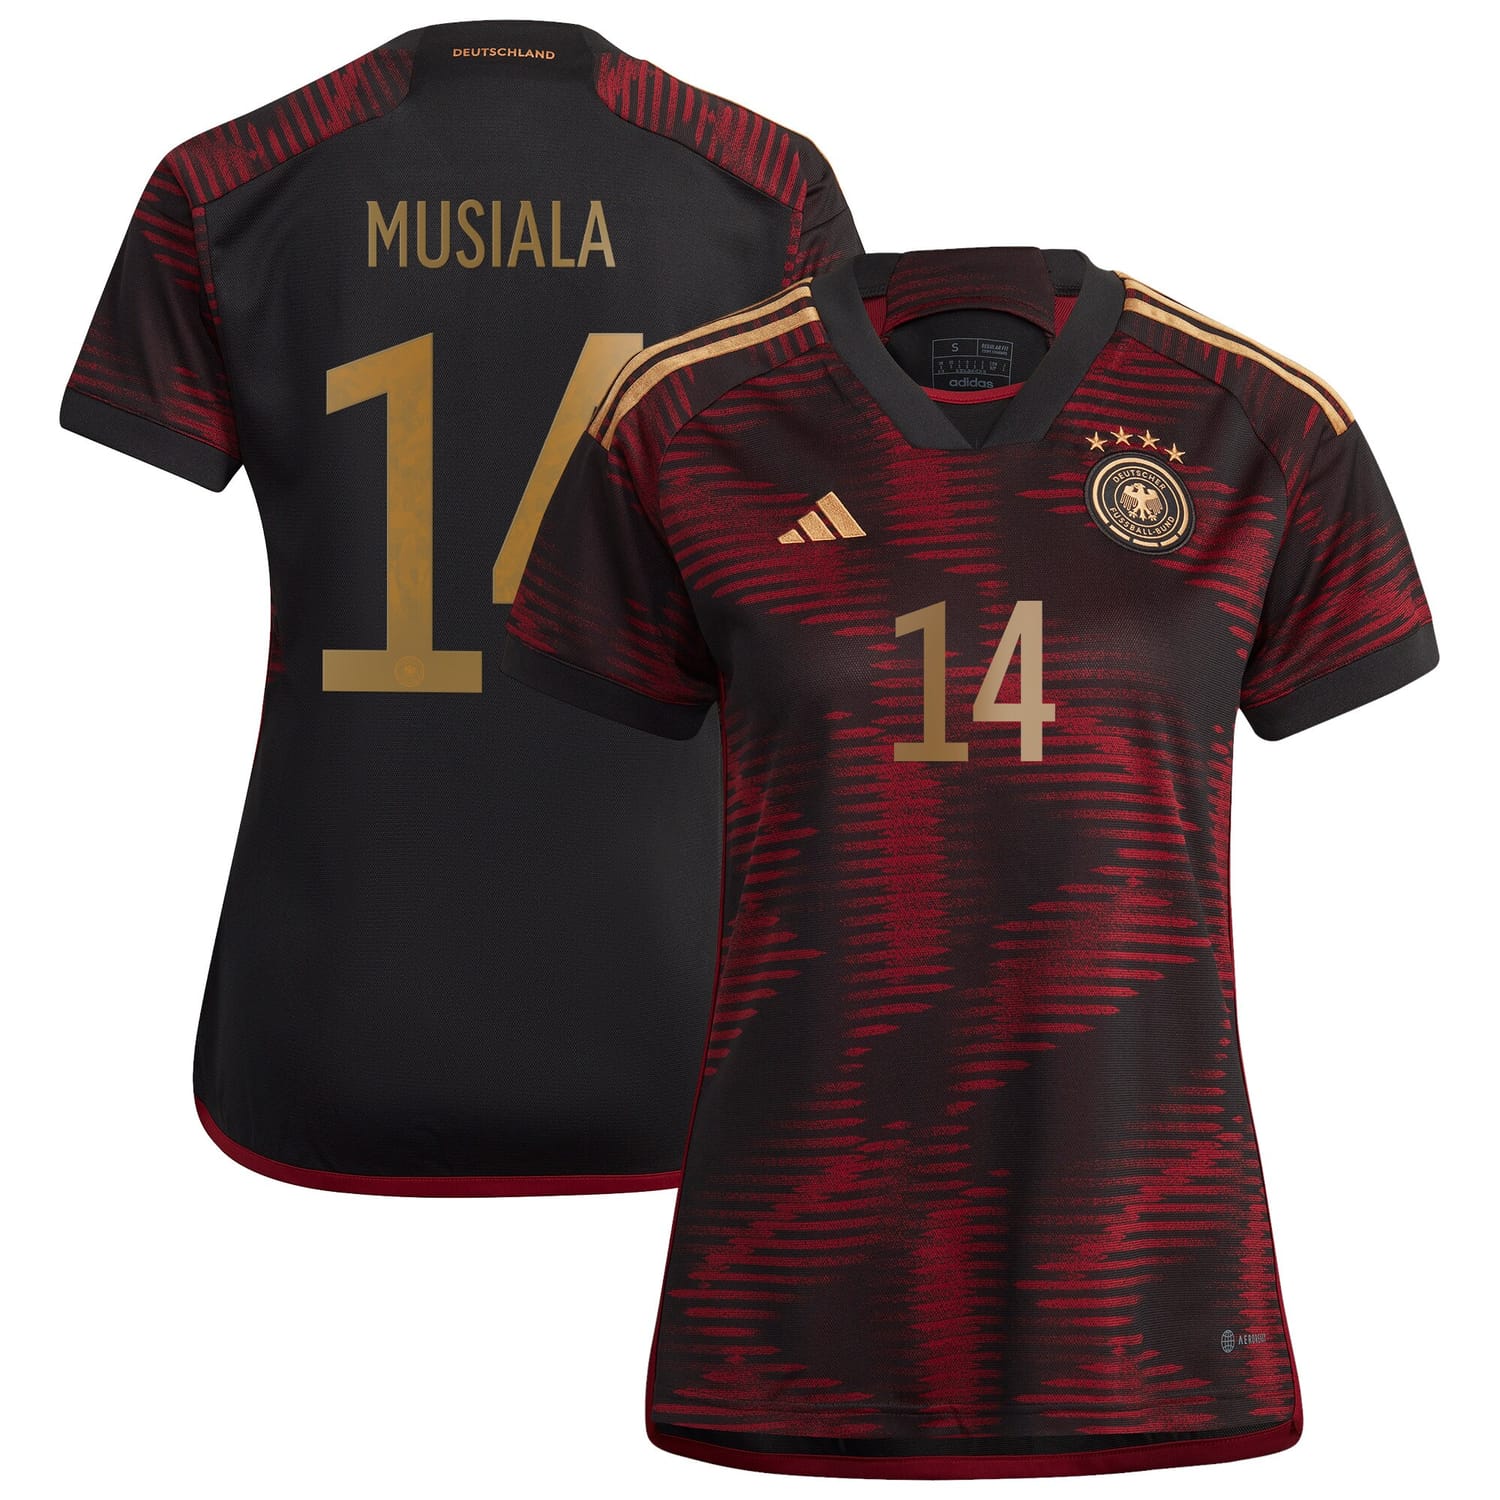 Germany National Team Away Jersey Shirt player Jamal Musiala 14 printing for Women